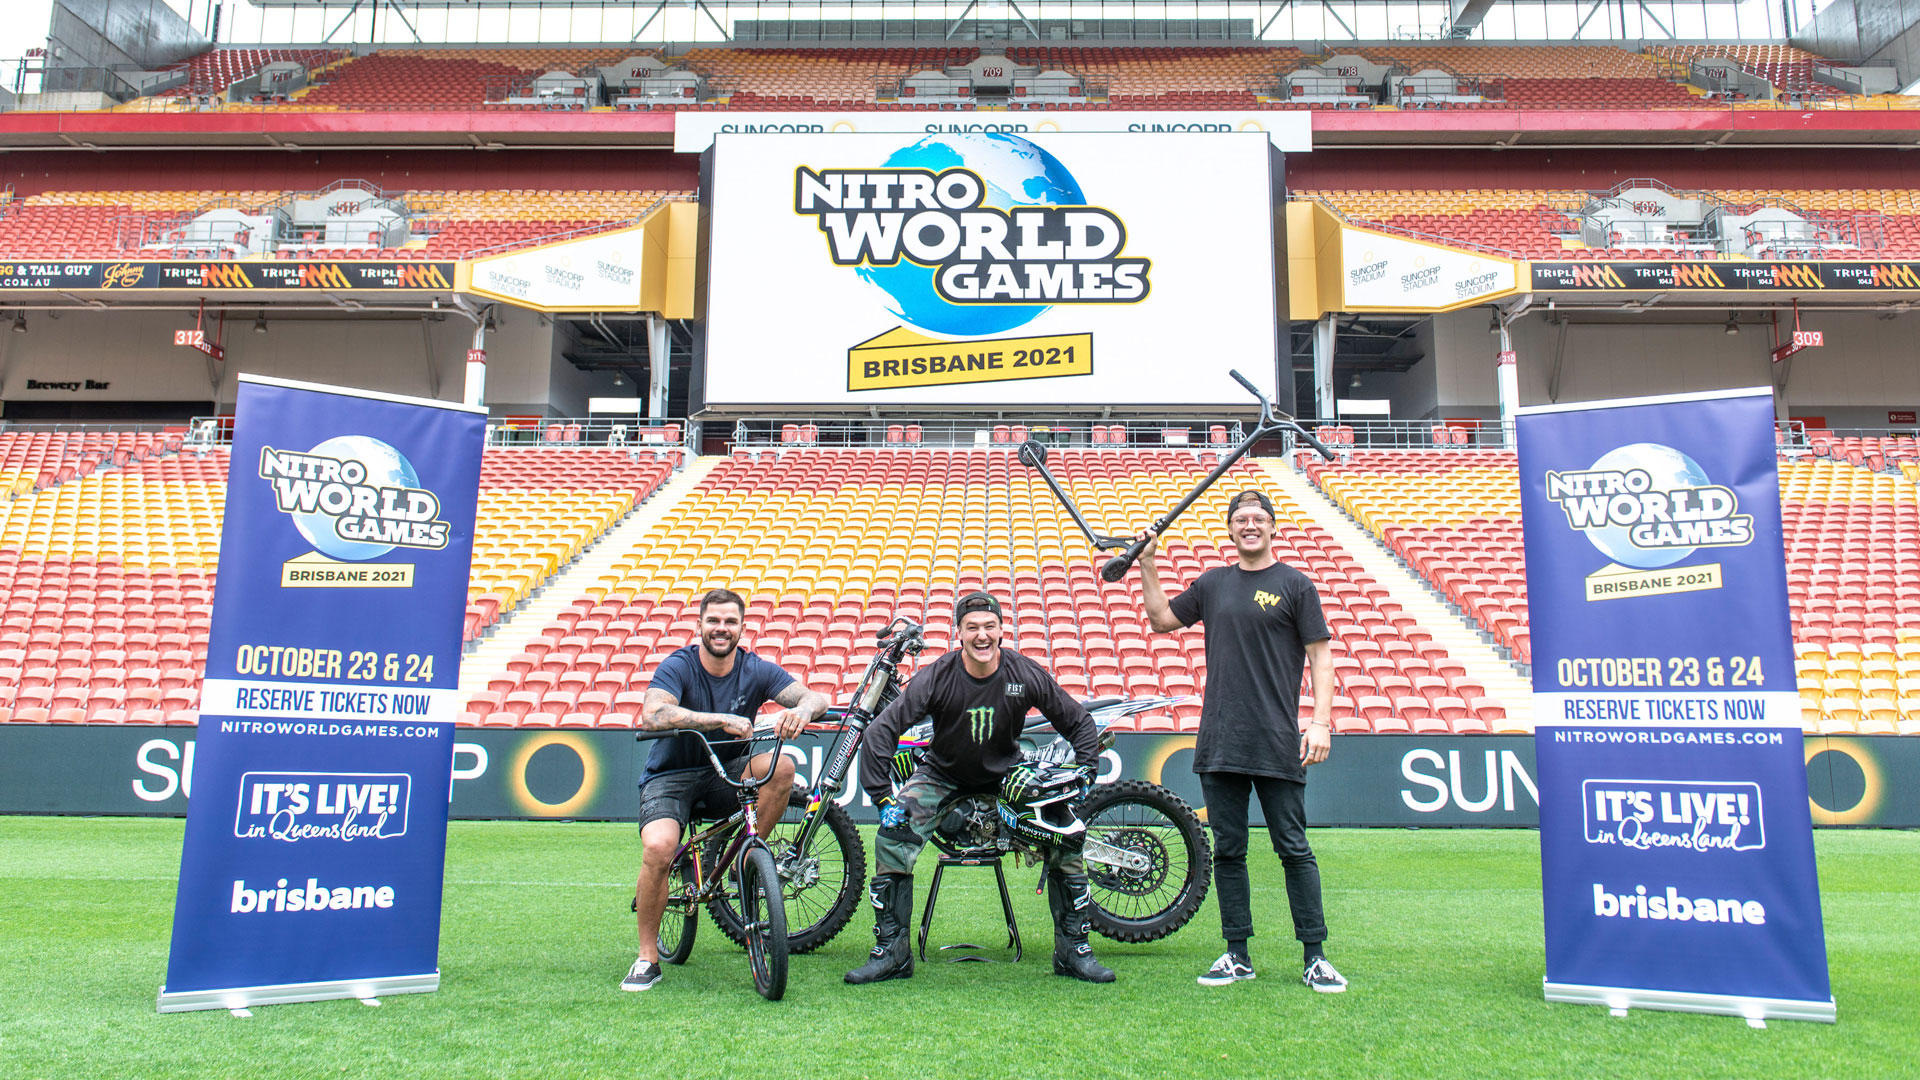 Brisbane announced as host of 2021 Nitro World Games 